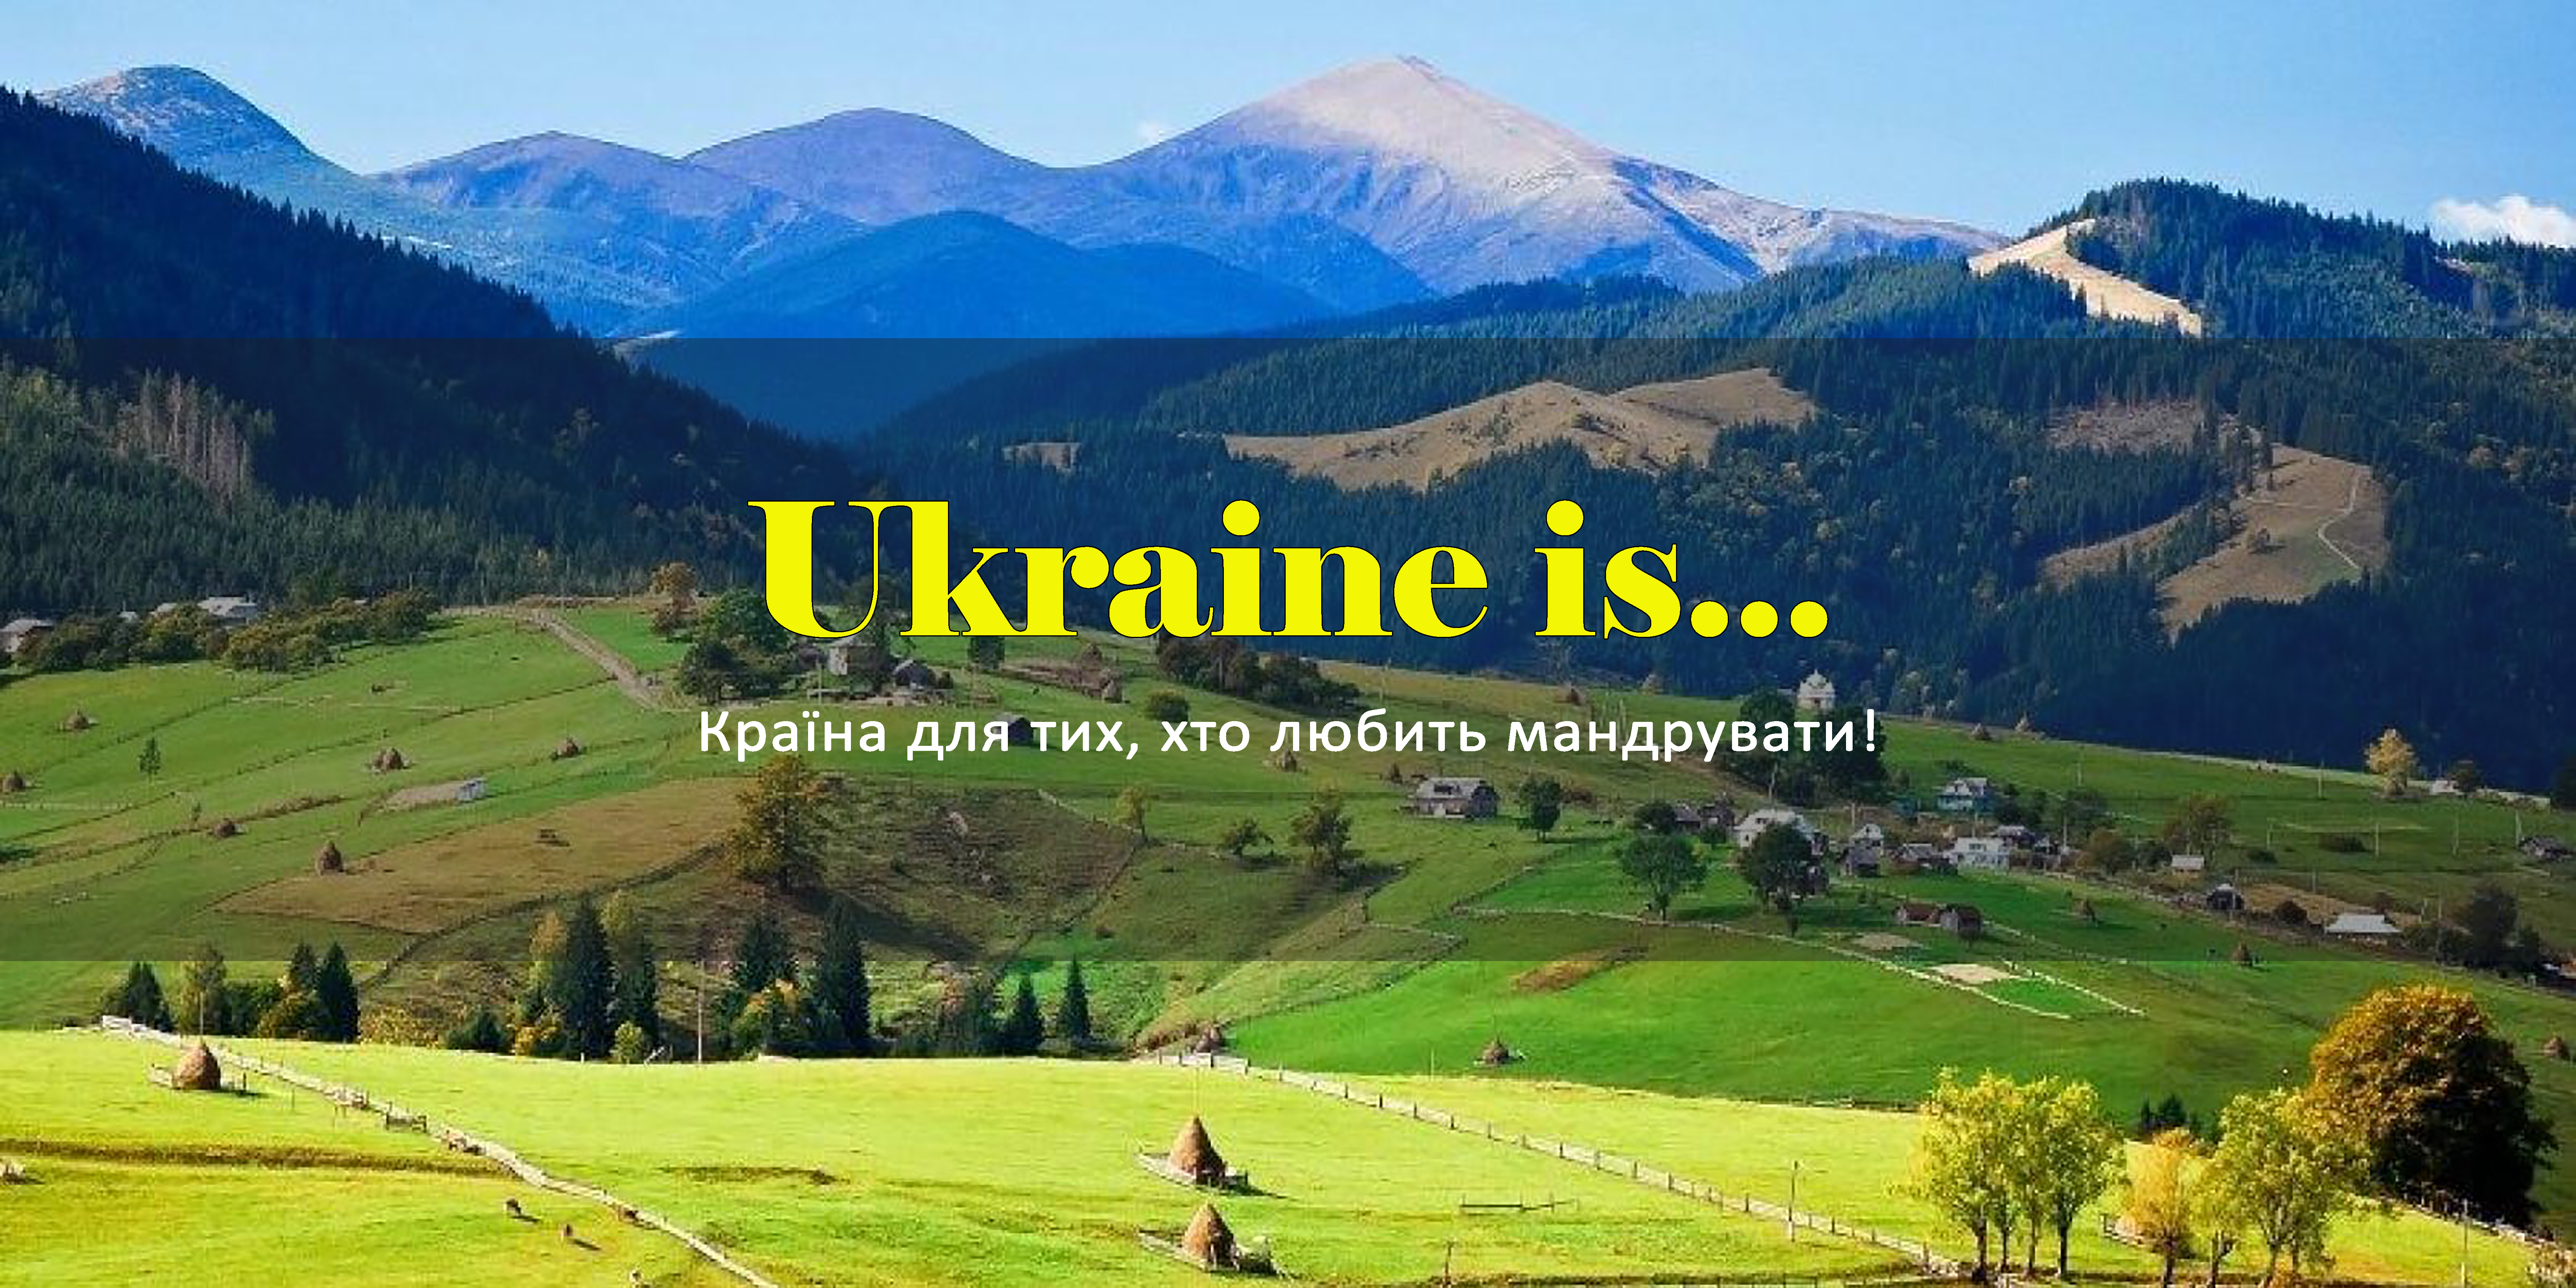 traveling by Ukraine